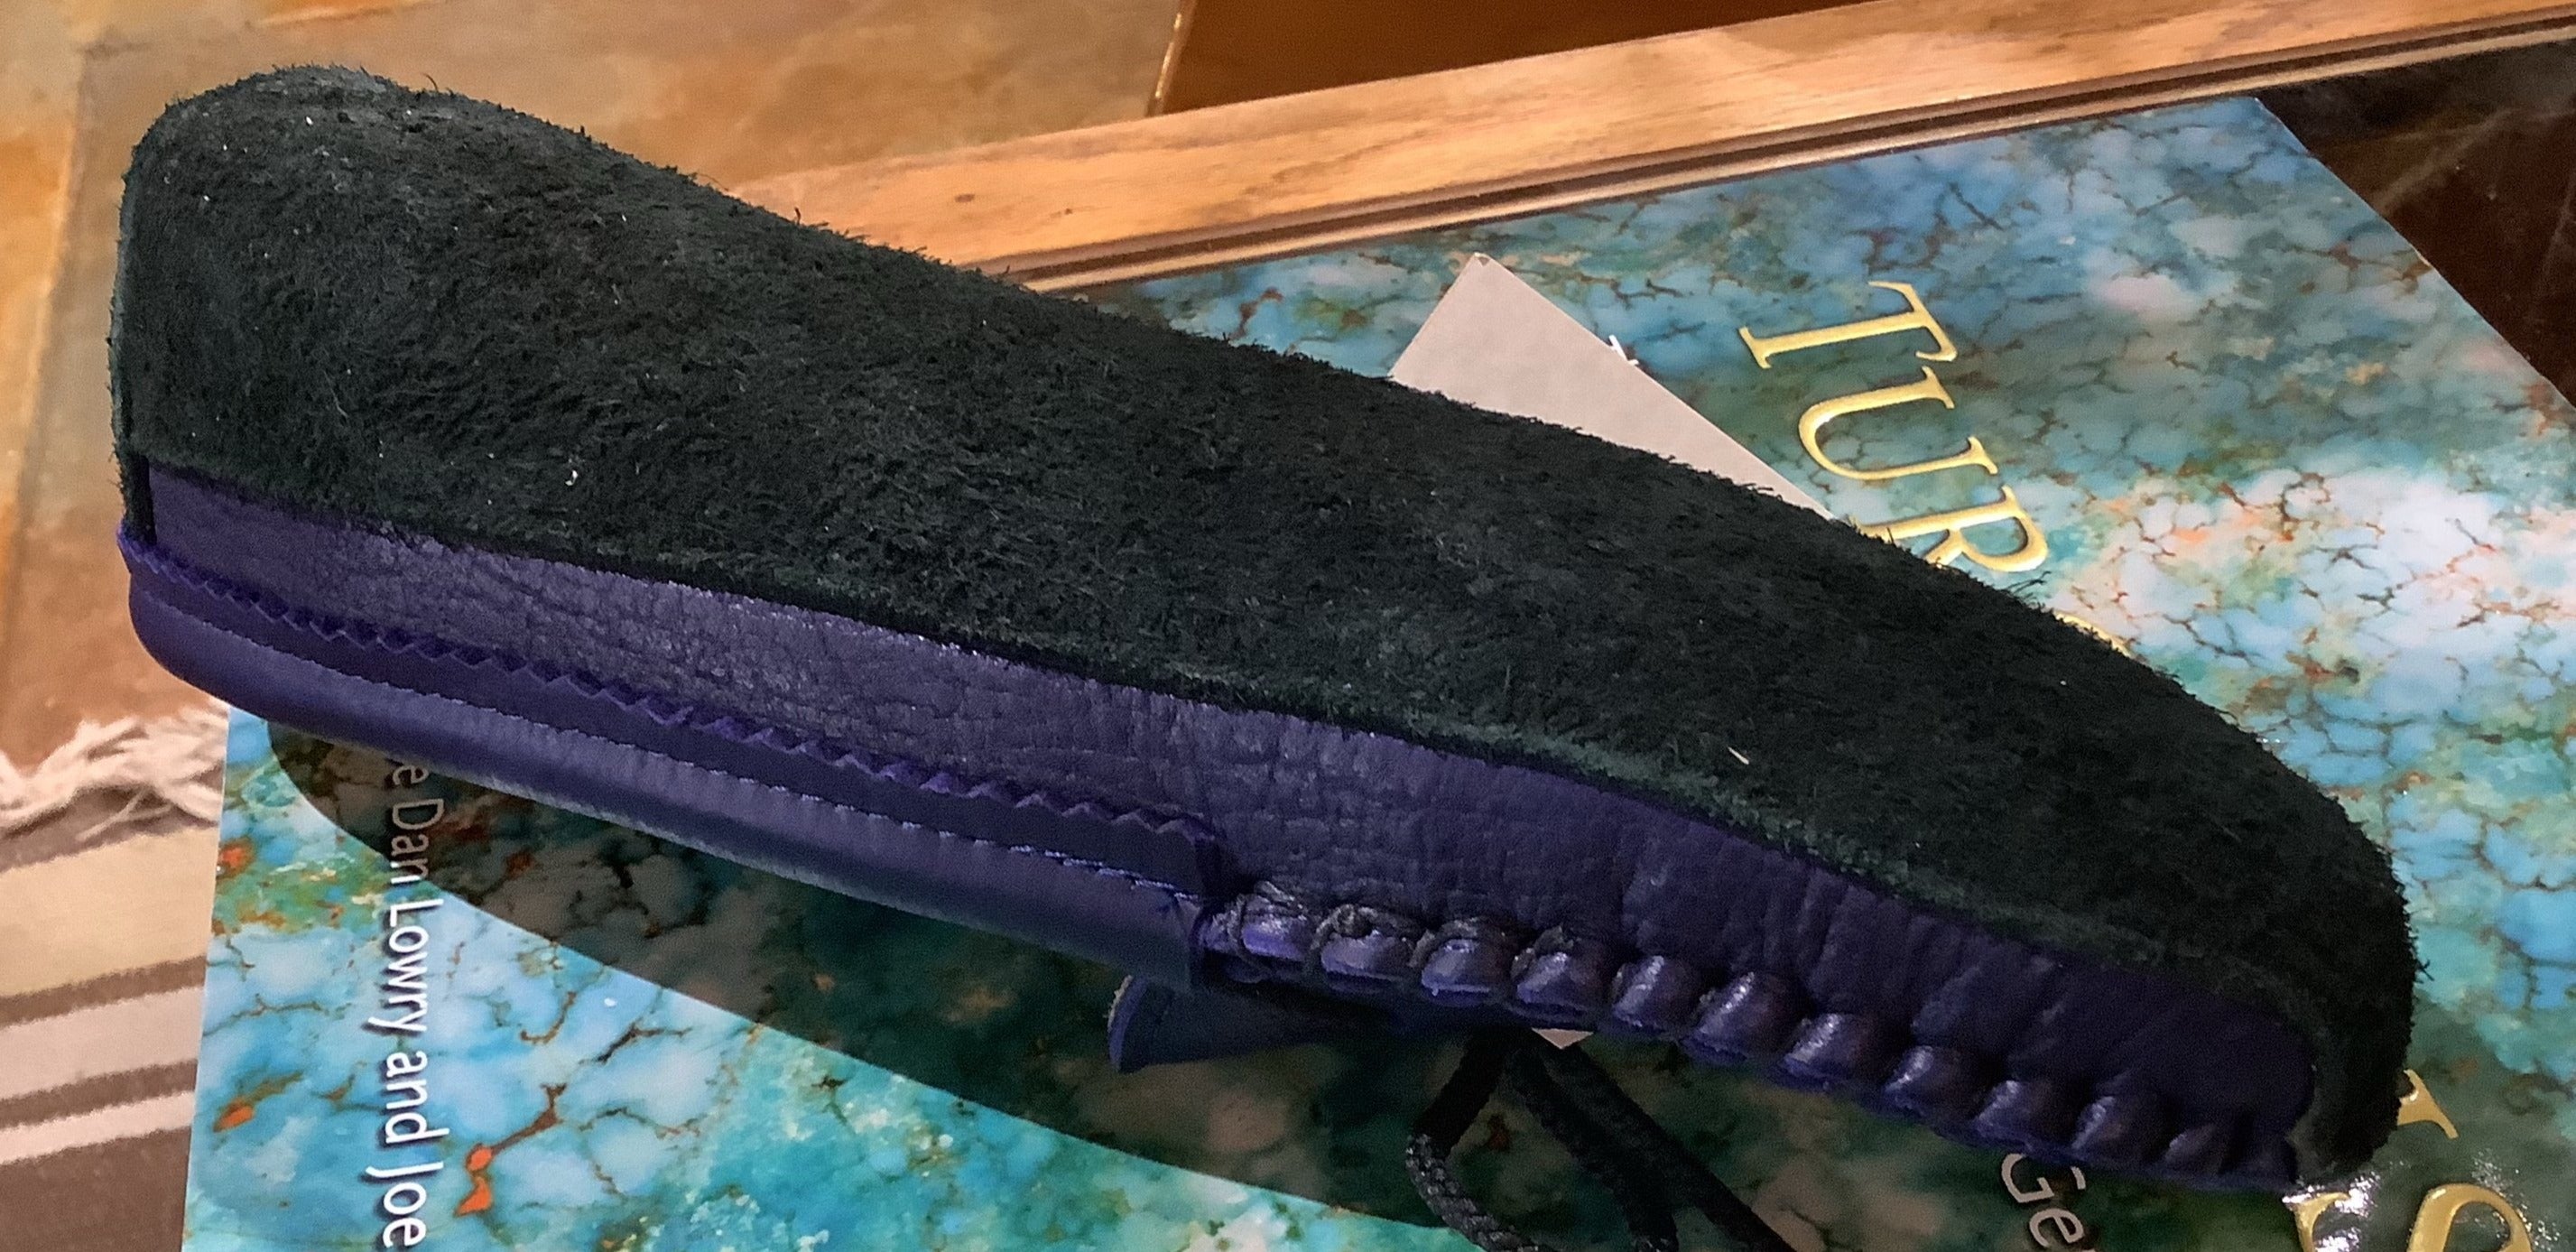 Footskins bison leather slipper/moccasins - style #4440